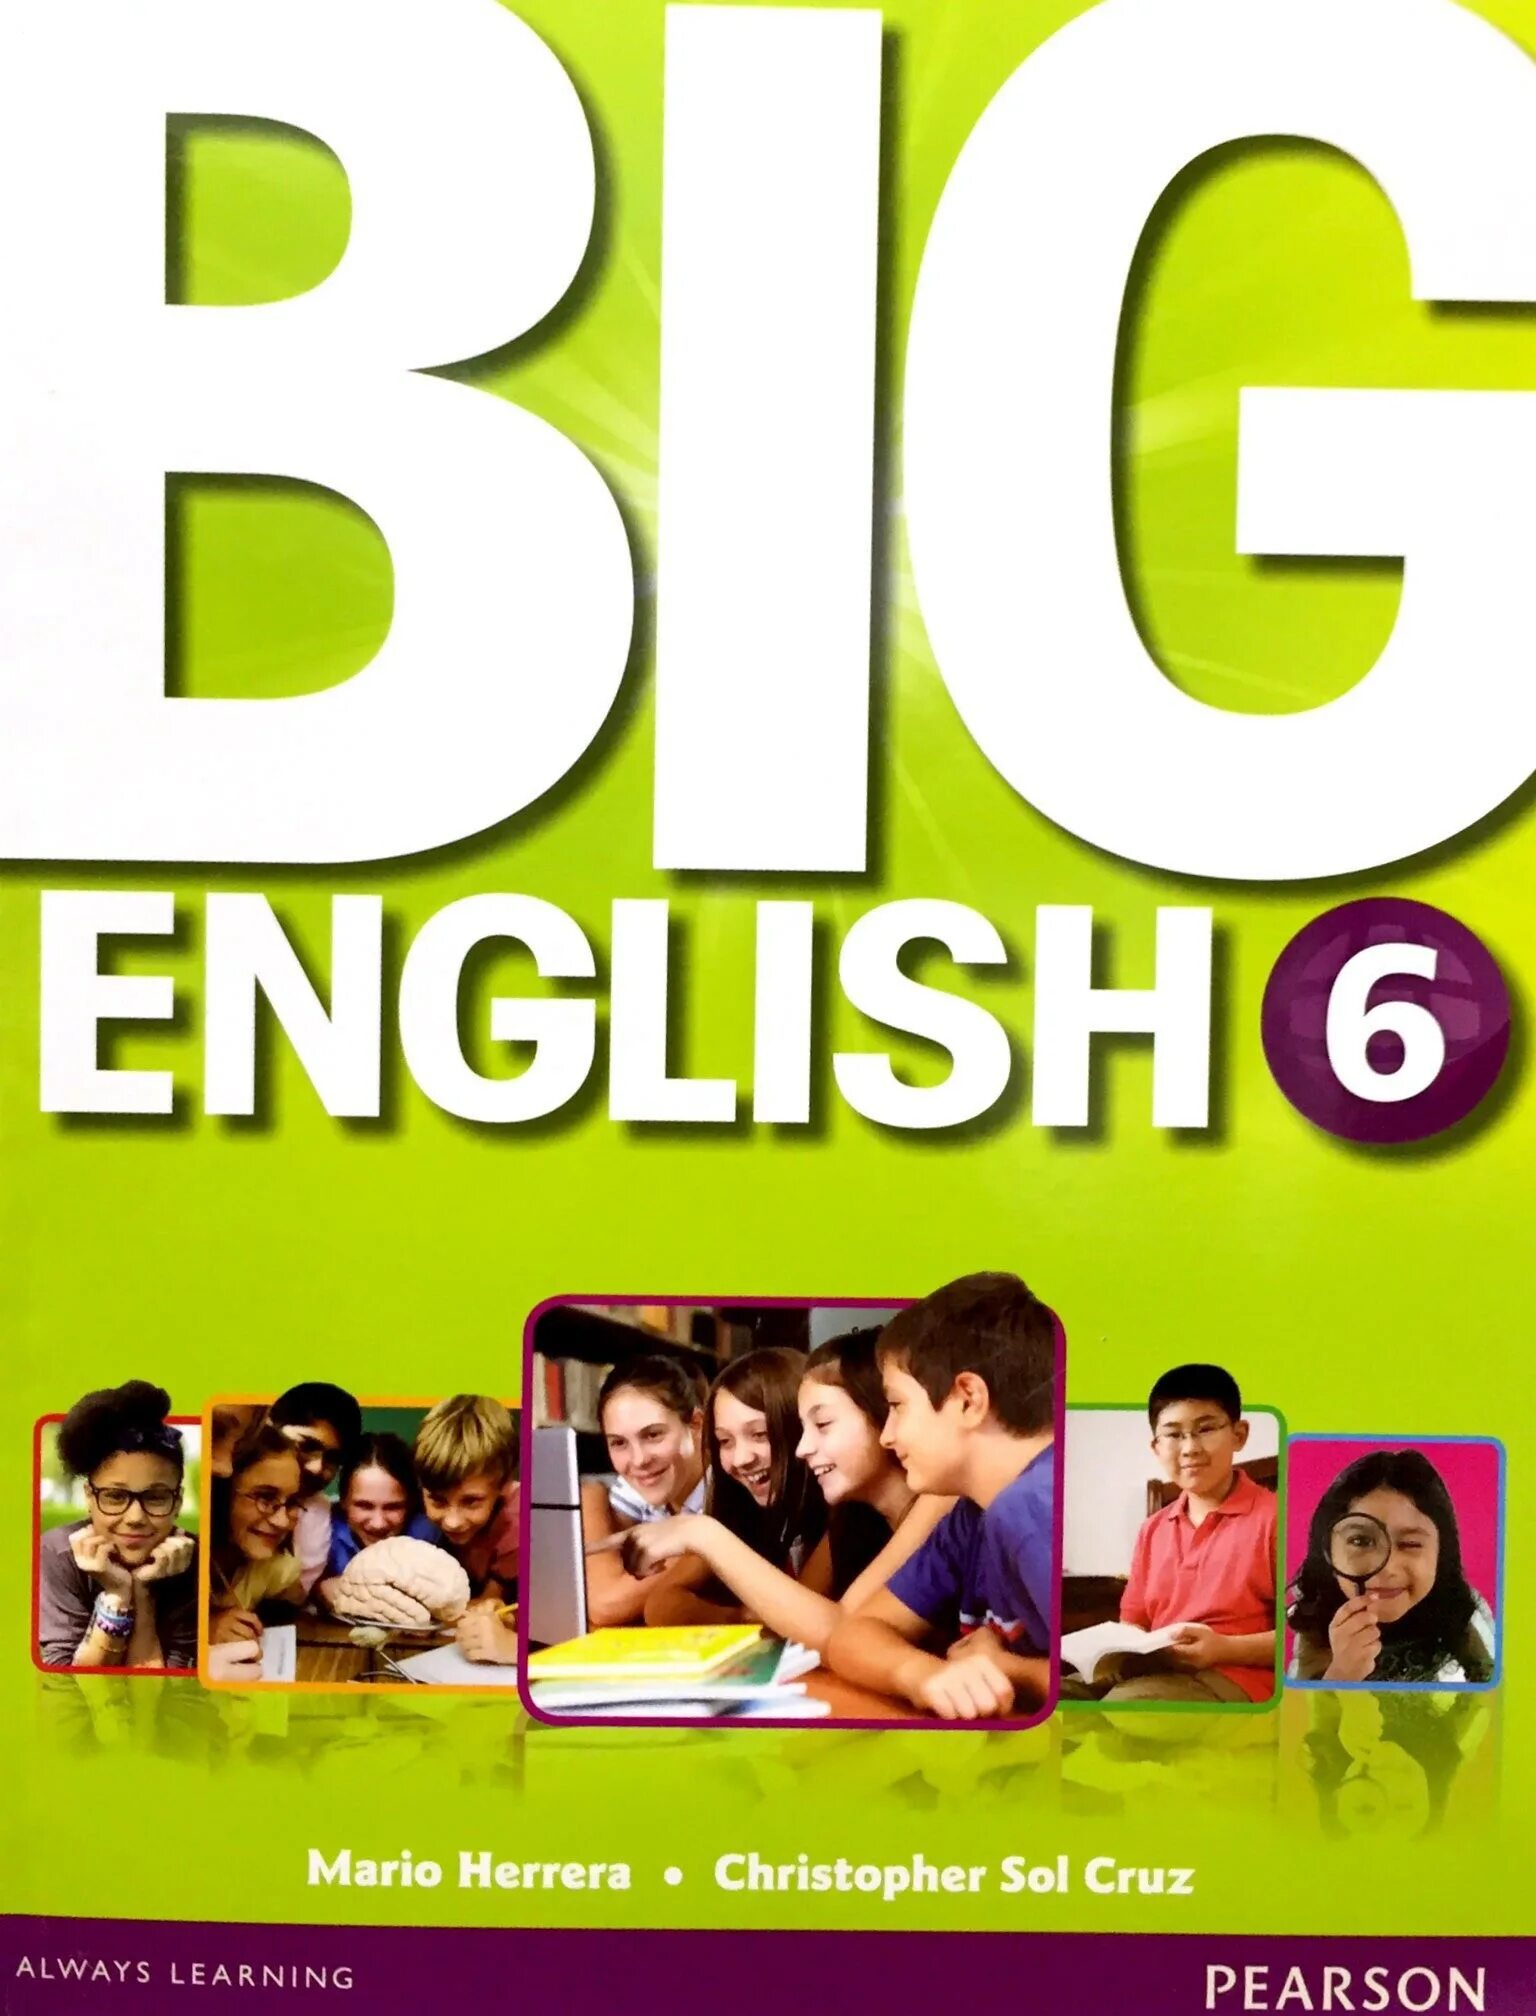 Английский 6. Learning English учебник. Пирсон английский язык. Биг Инглиш учебник 1. Английский учебник big English 2 activity book.